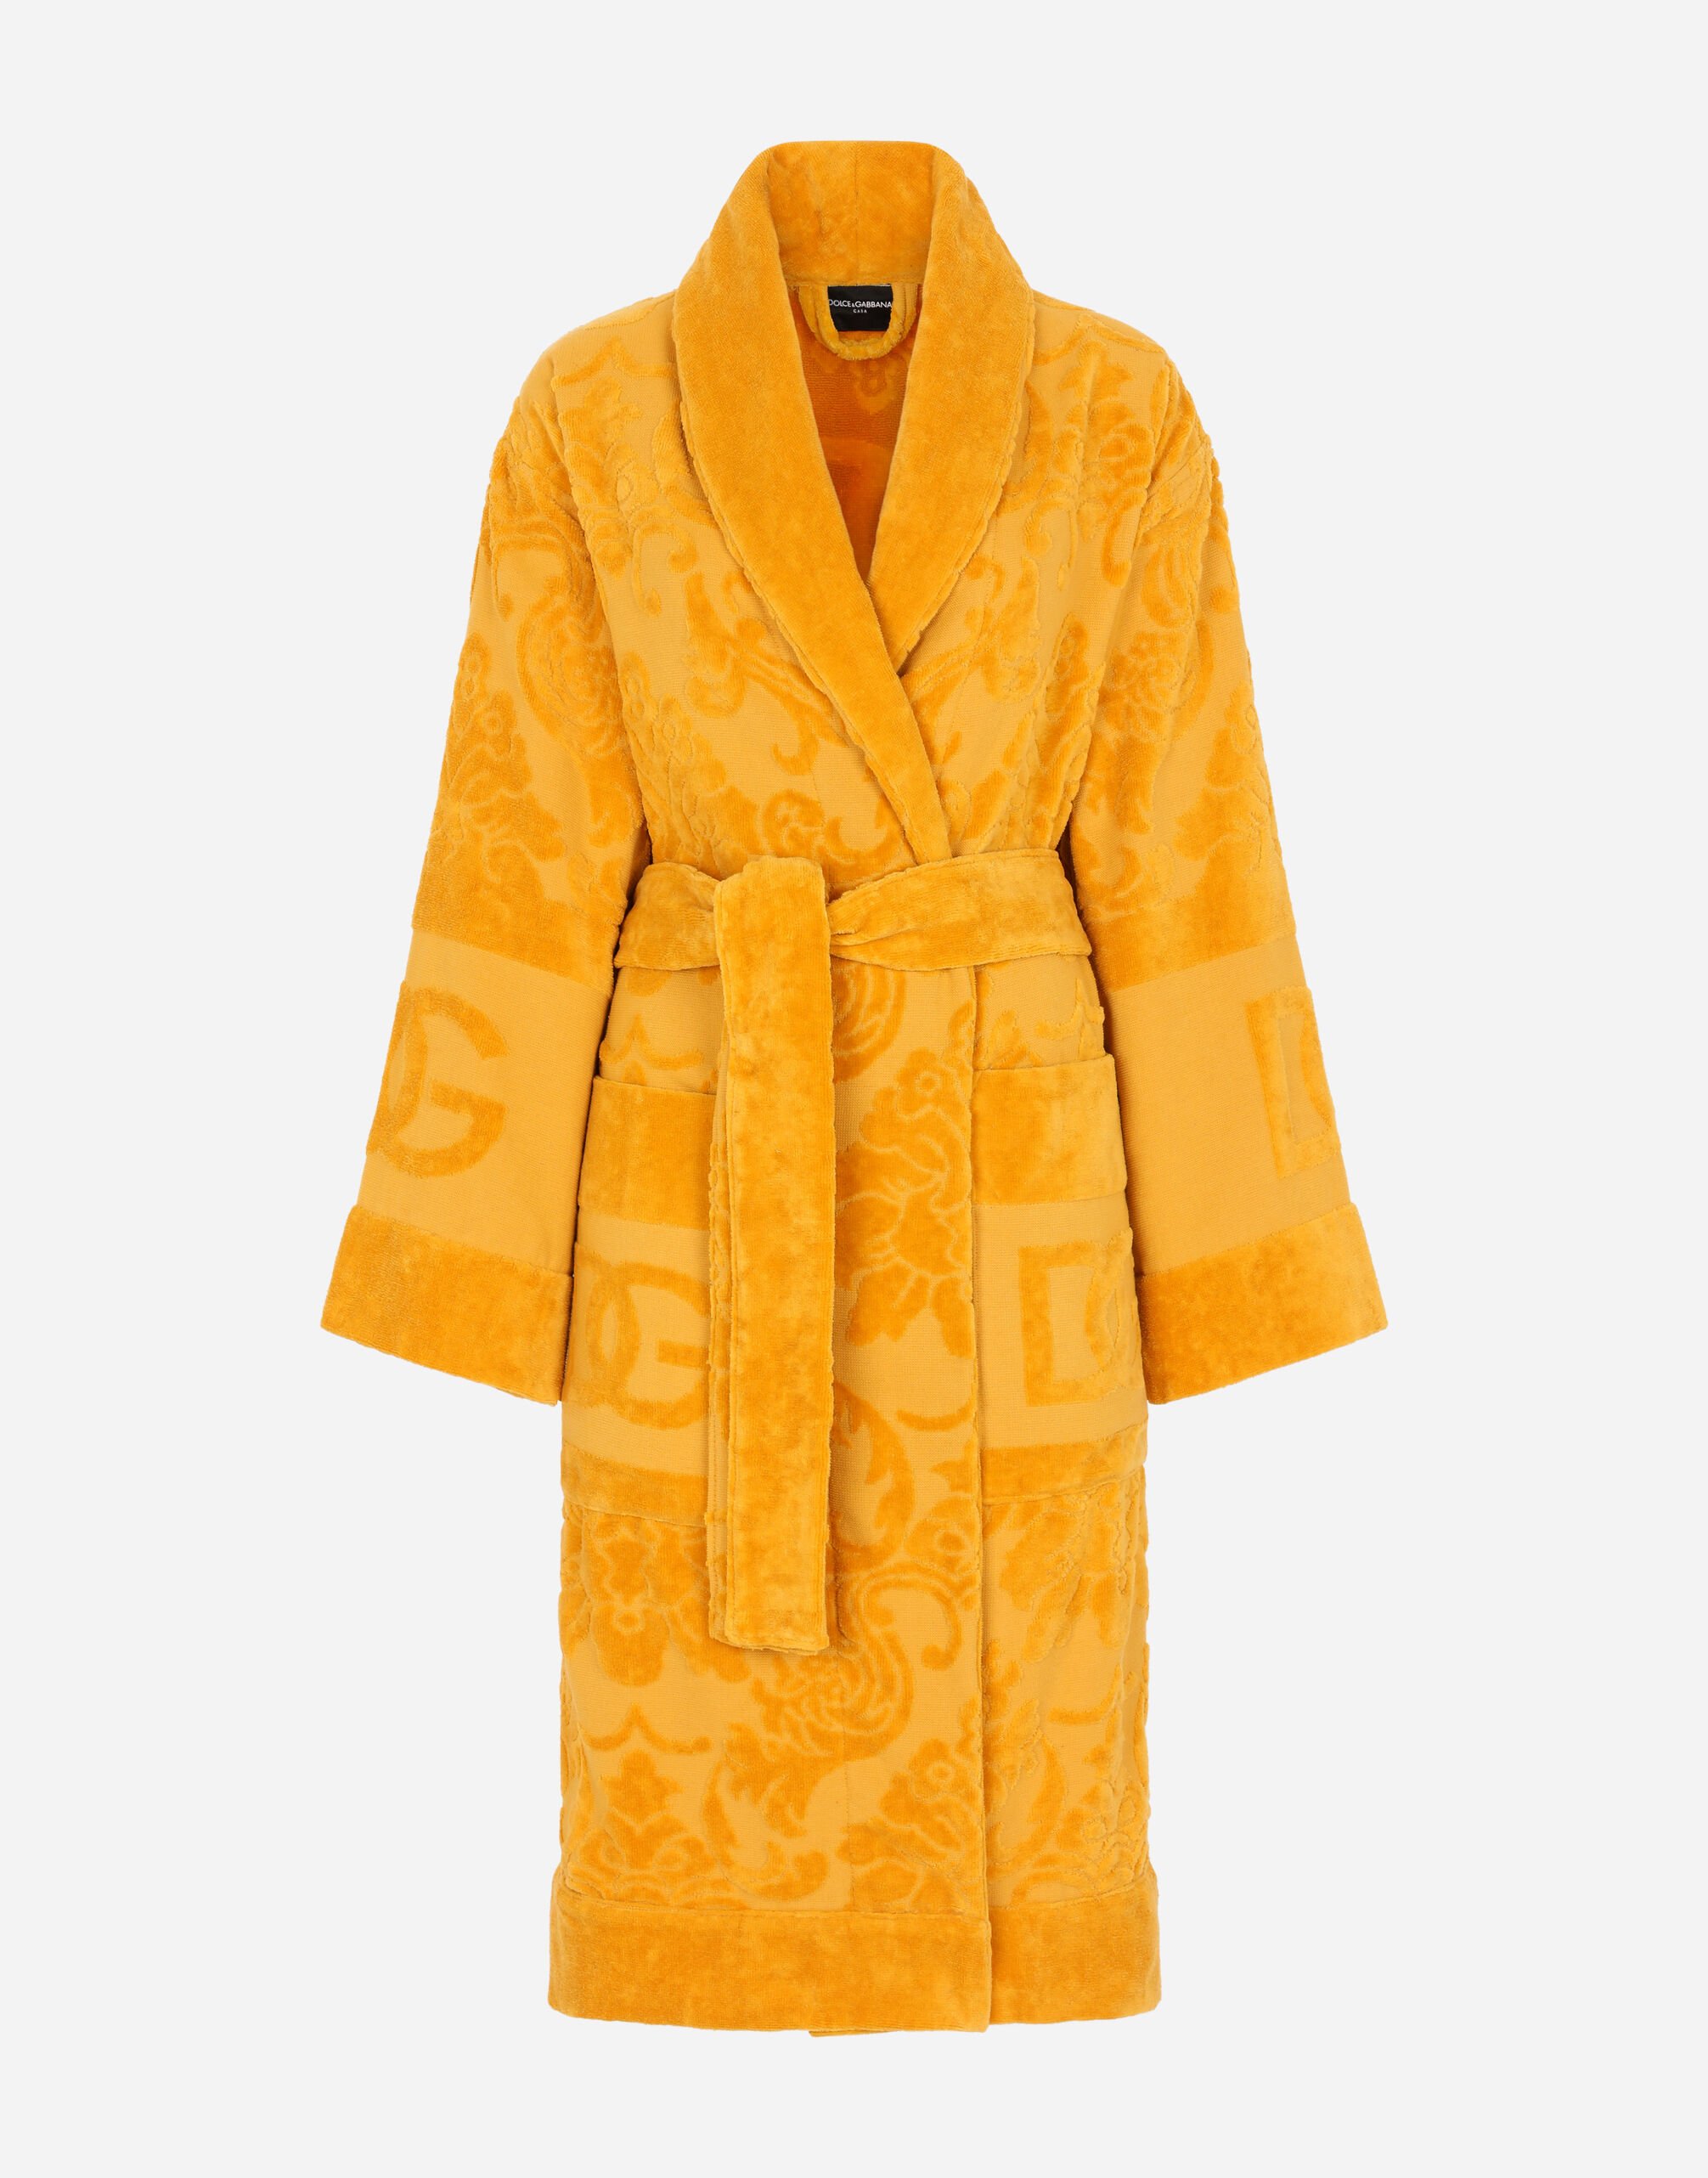 Dolce & Gabbana Bath Robe in Terry Cotton Jacquard Multicolor VL1132VLTW2